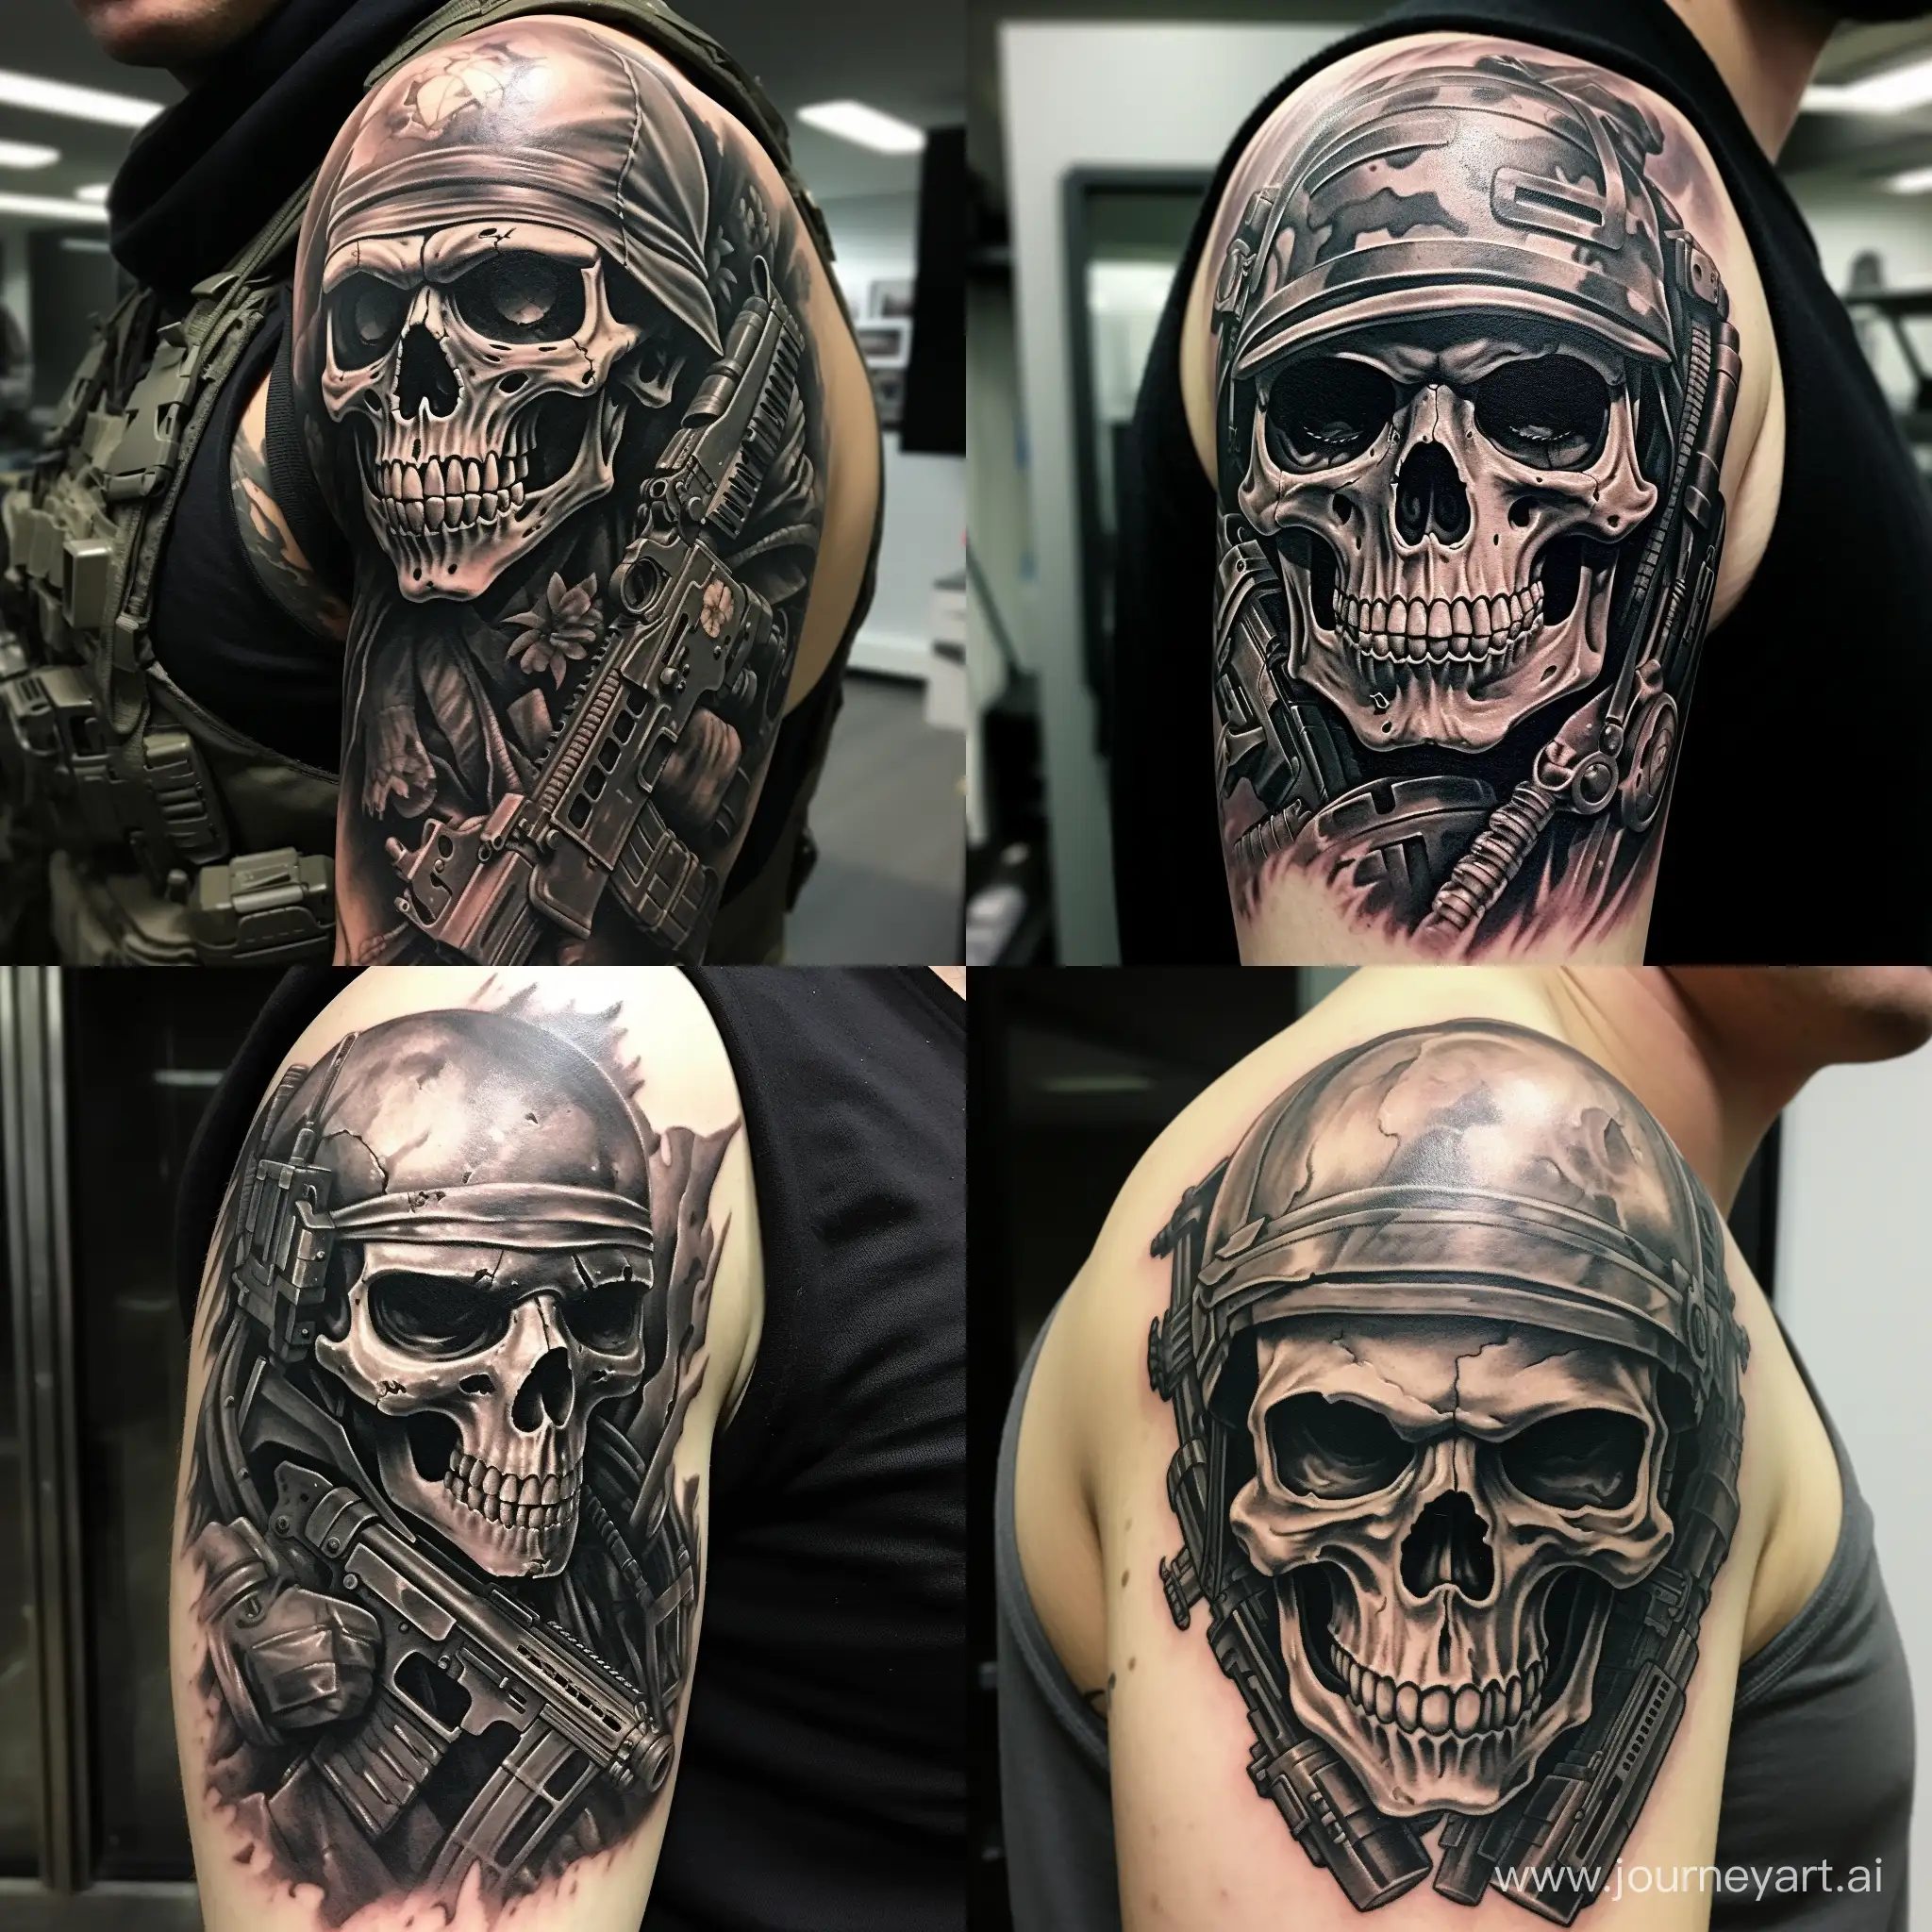 Skull soldier tatoo